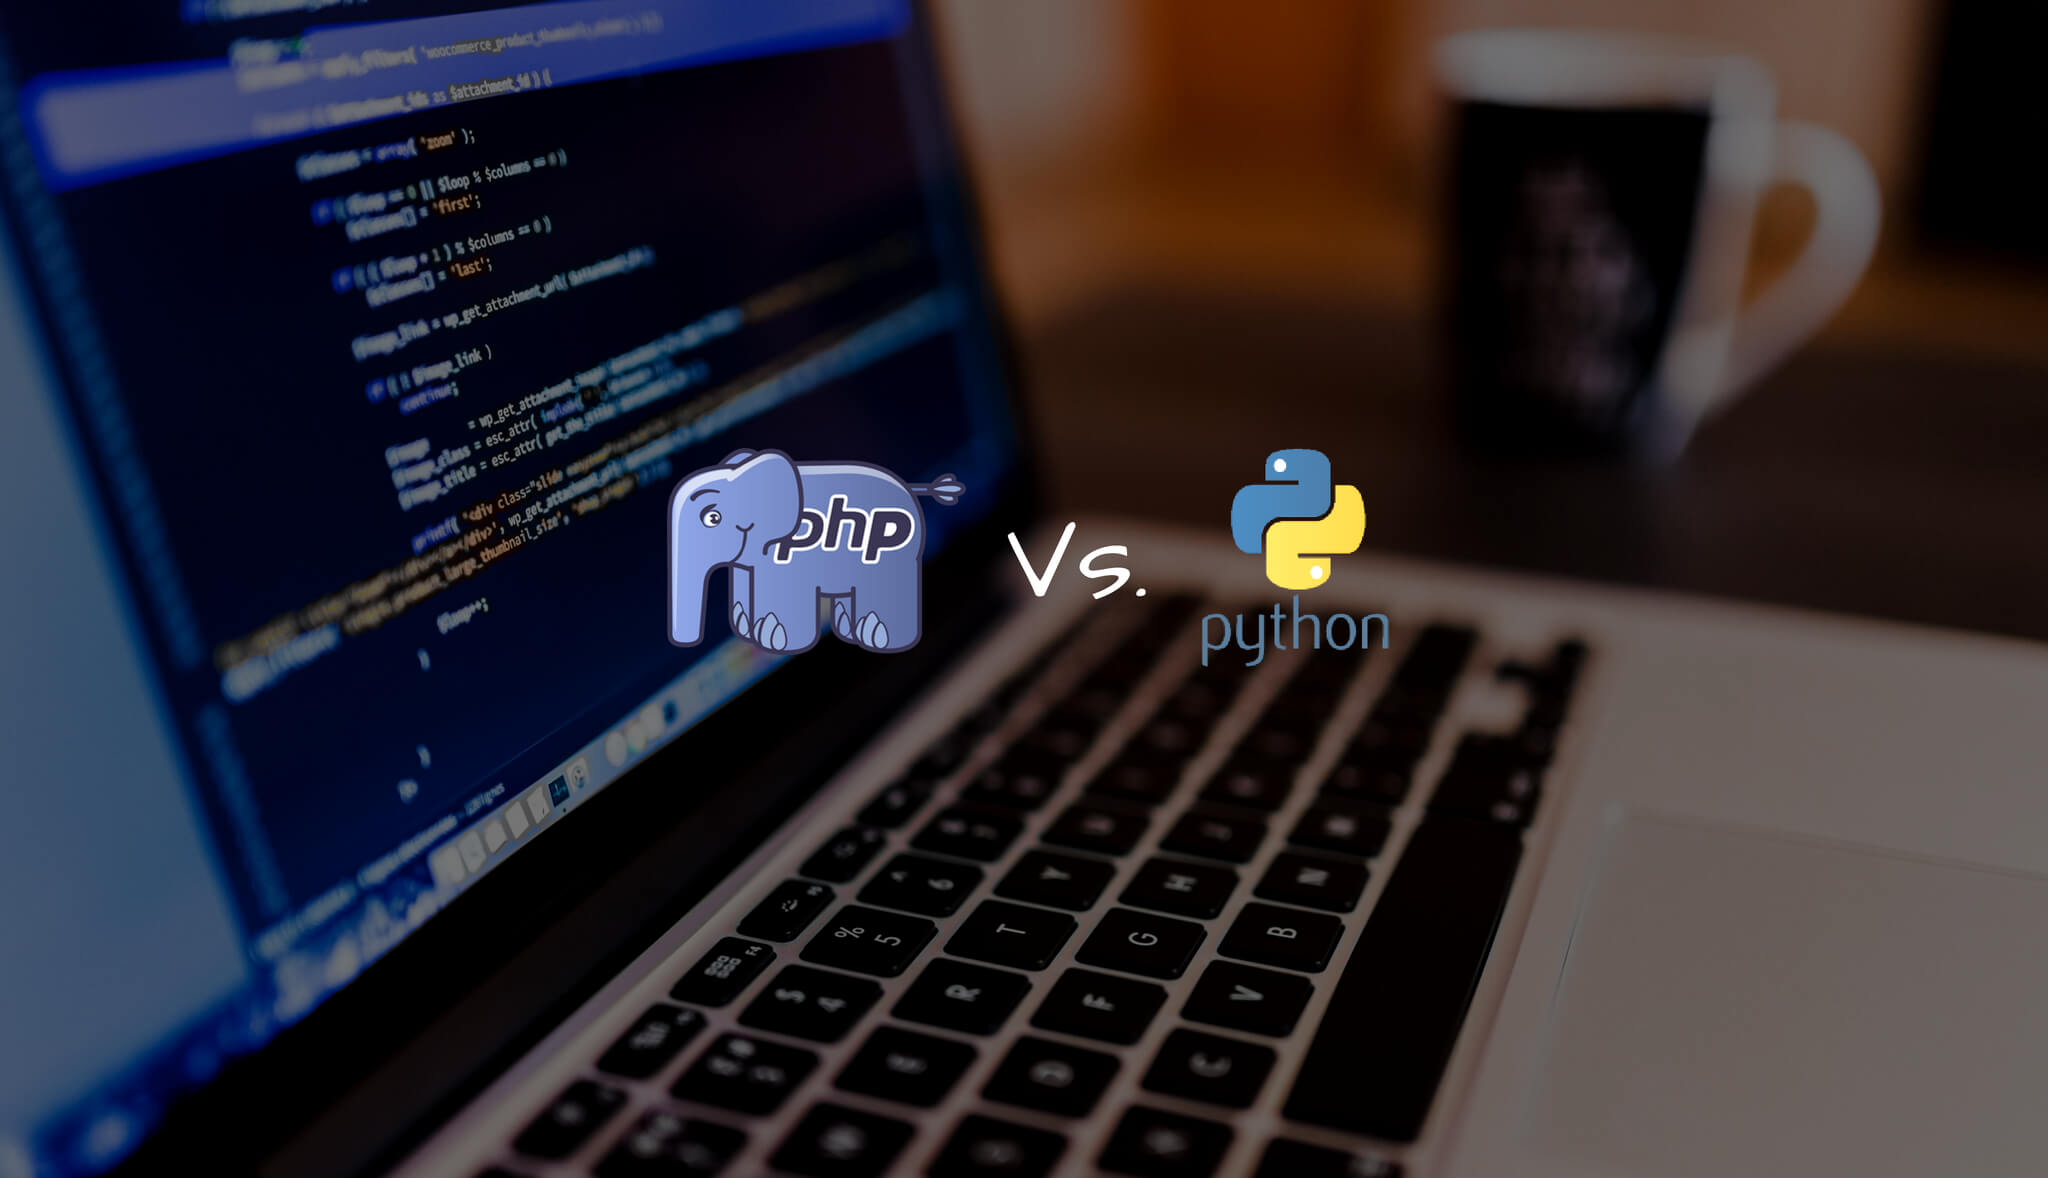 PHP vs Python